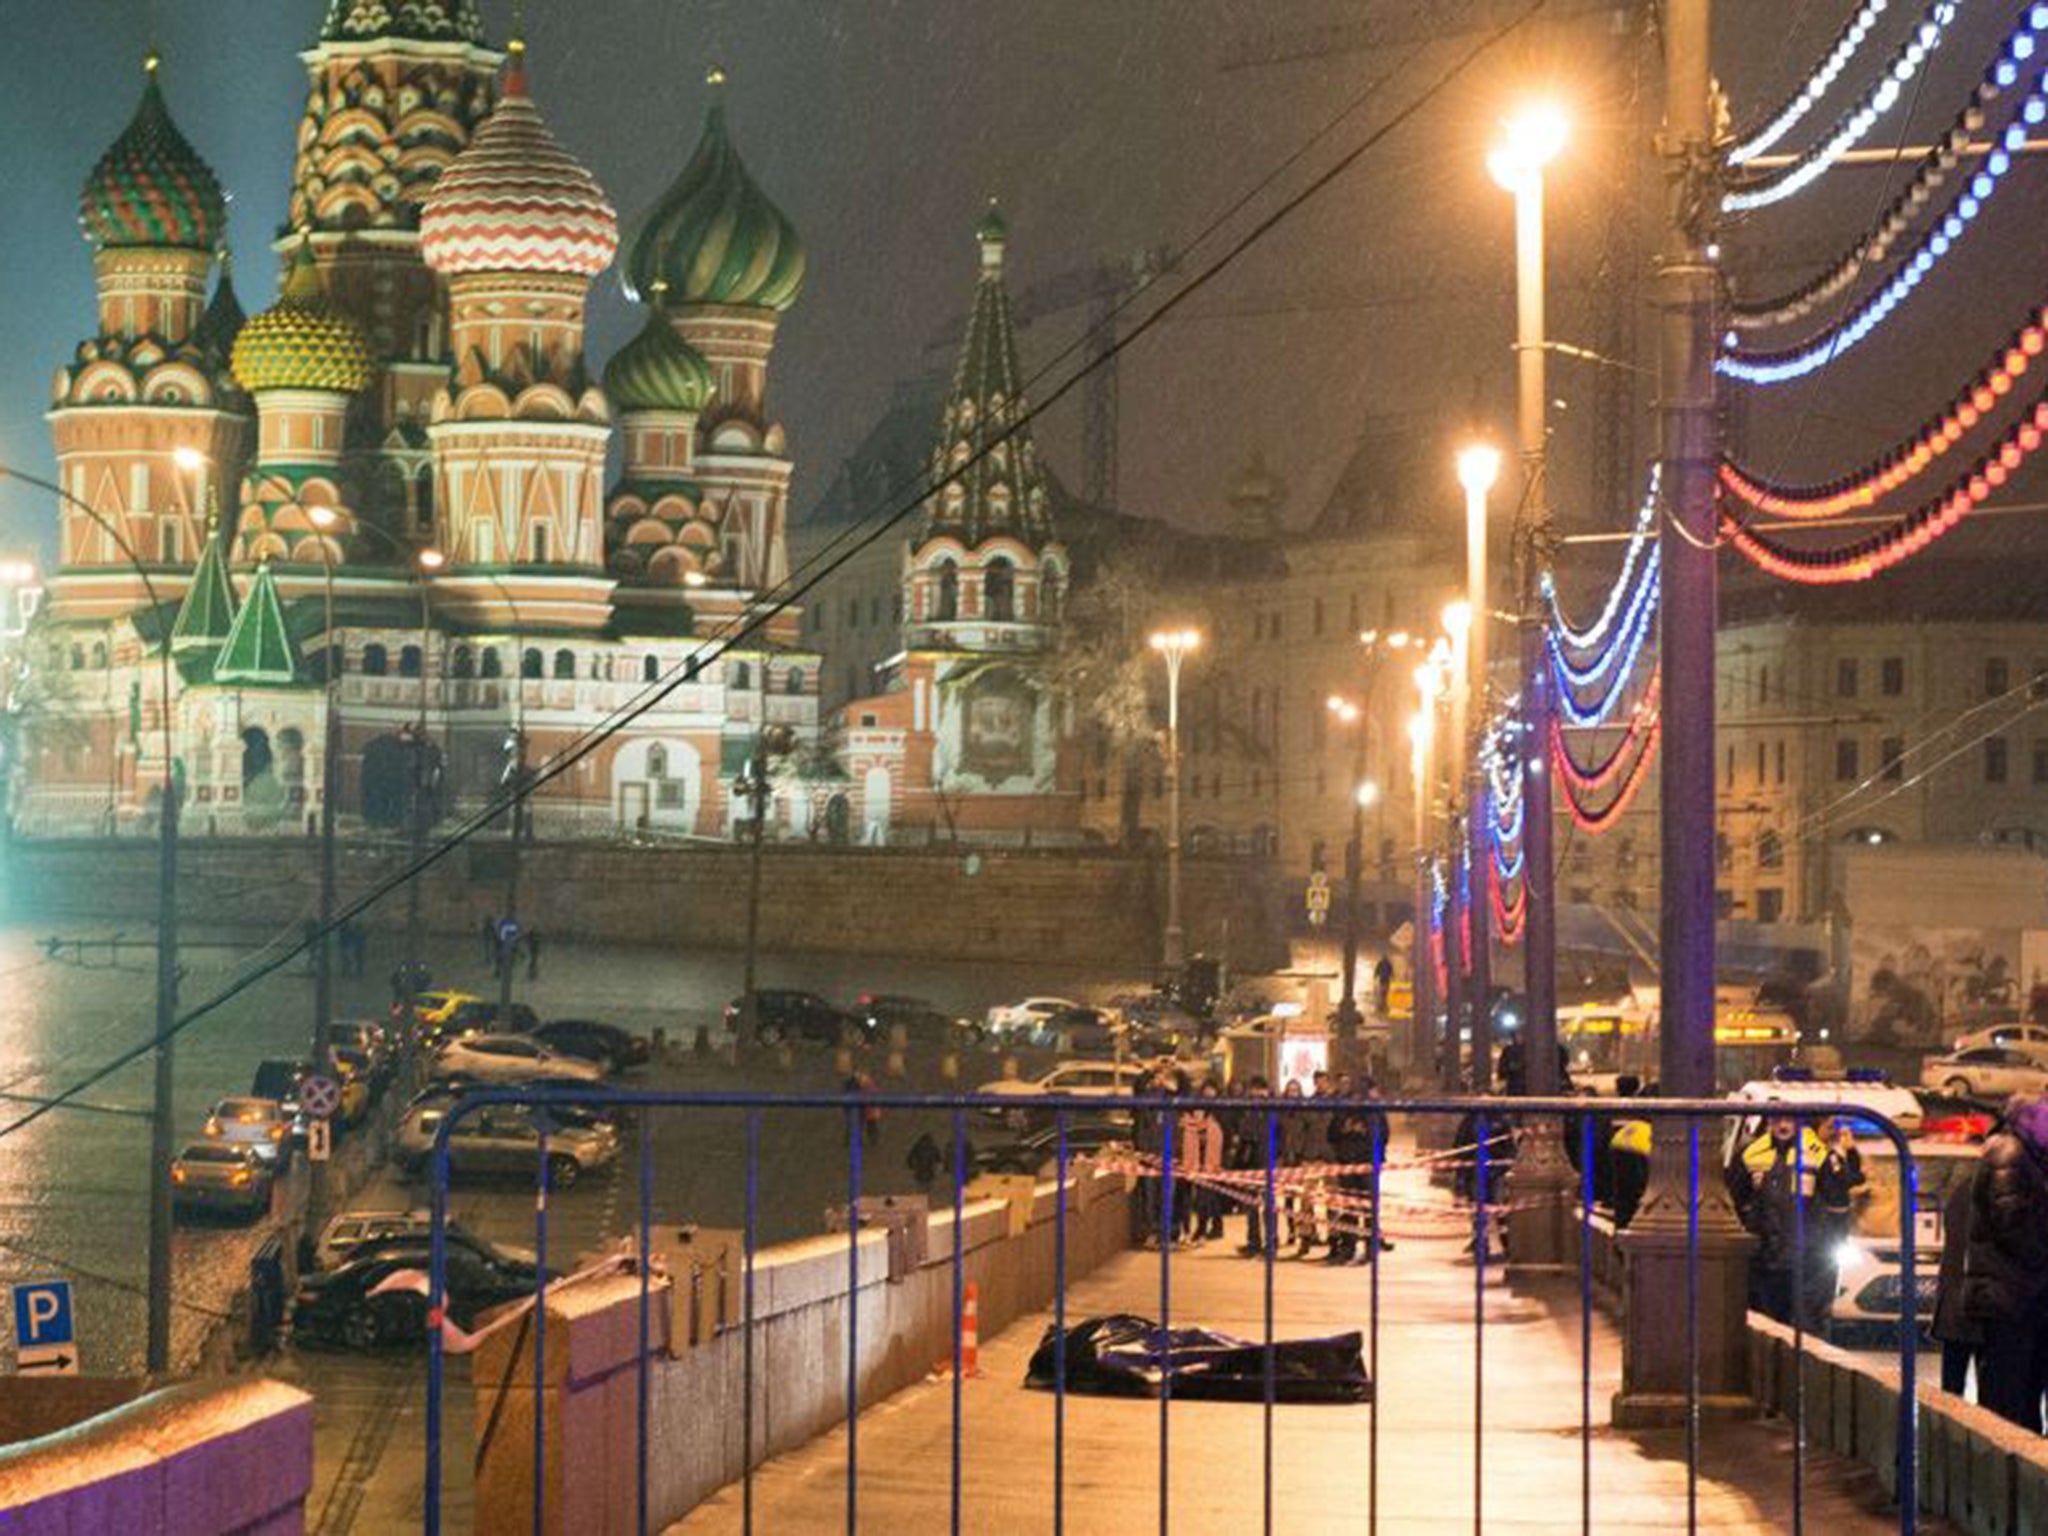 On the bridge: Boris Nemtsov was shot close to the Kremlin on Friday night